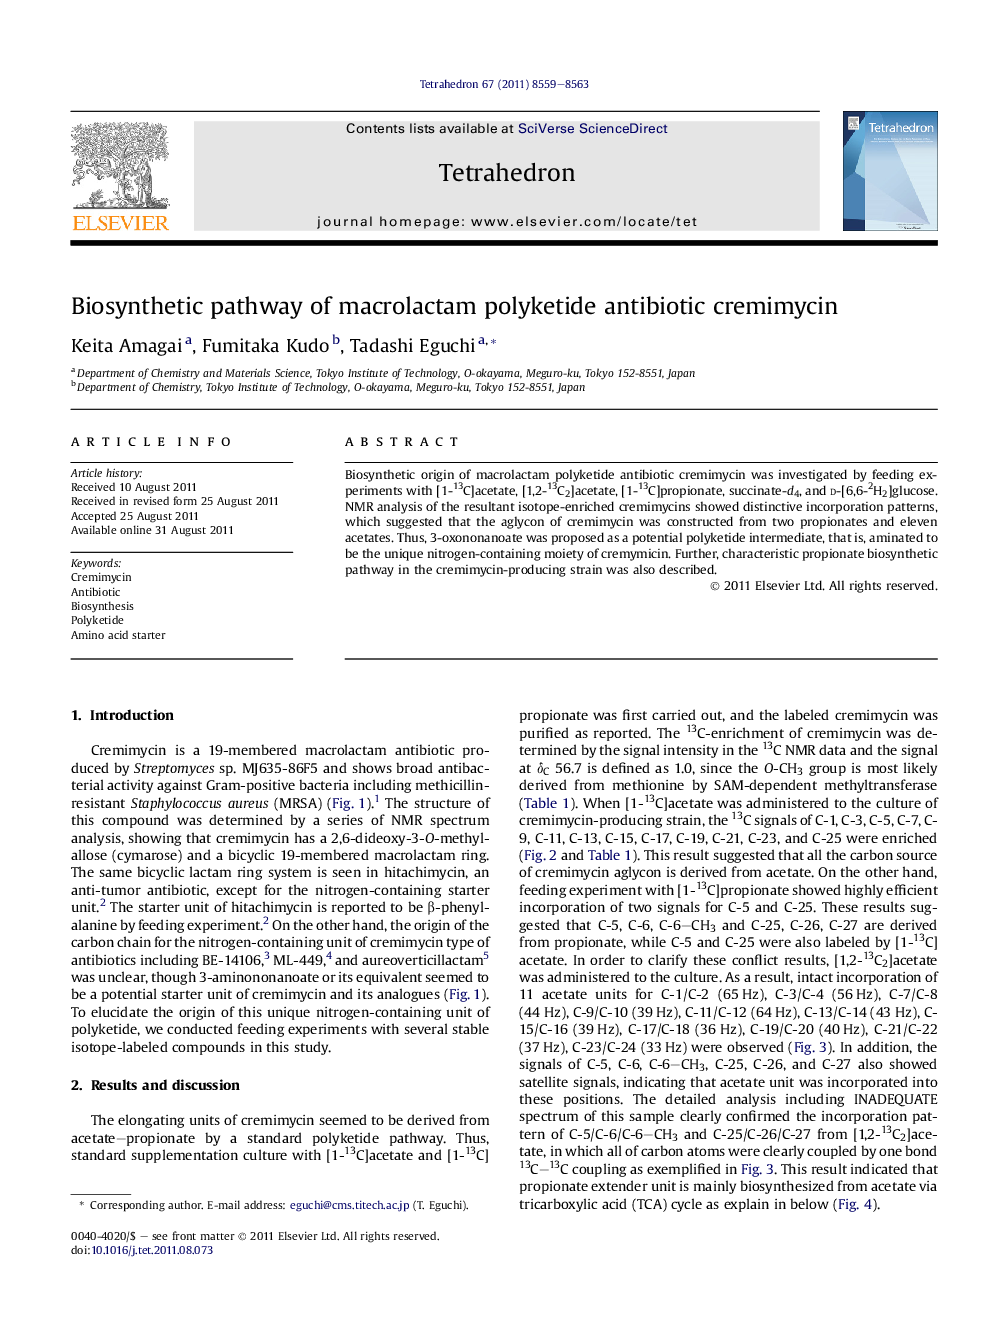 Biosynthetic pathway of macrolactam polyketide antibiotic cremimycin